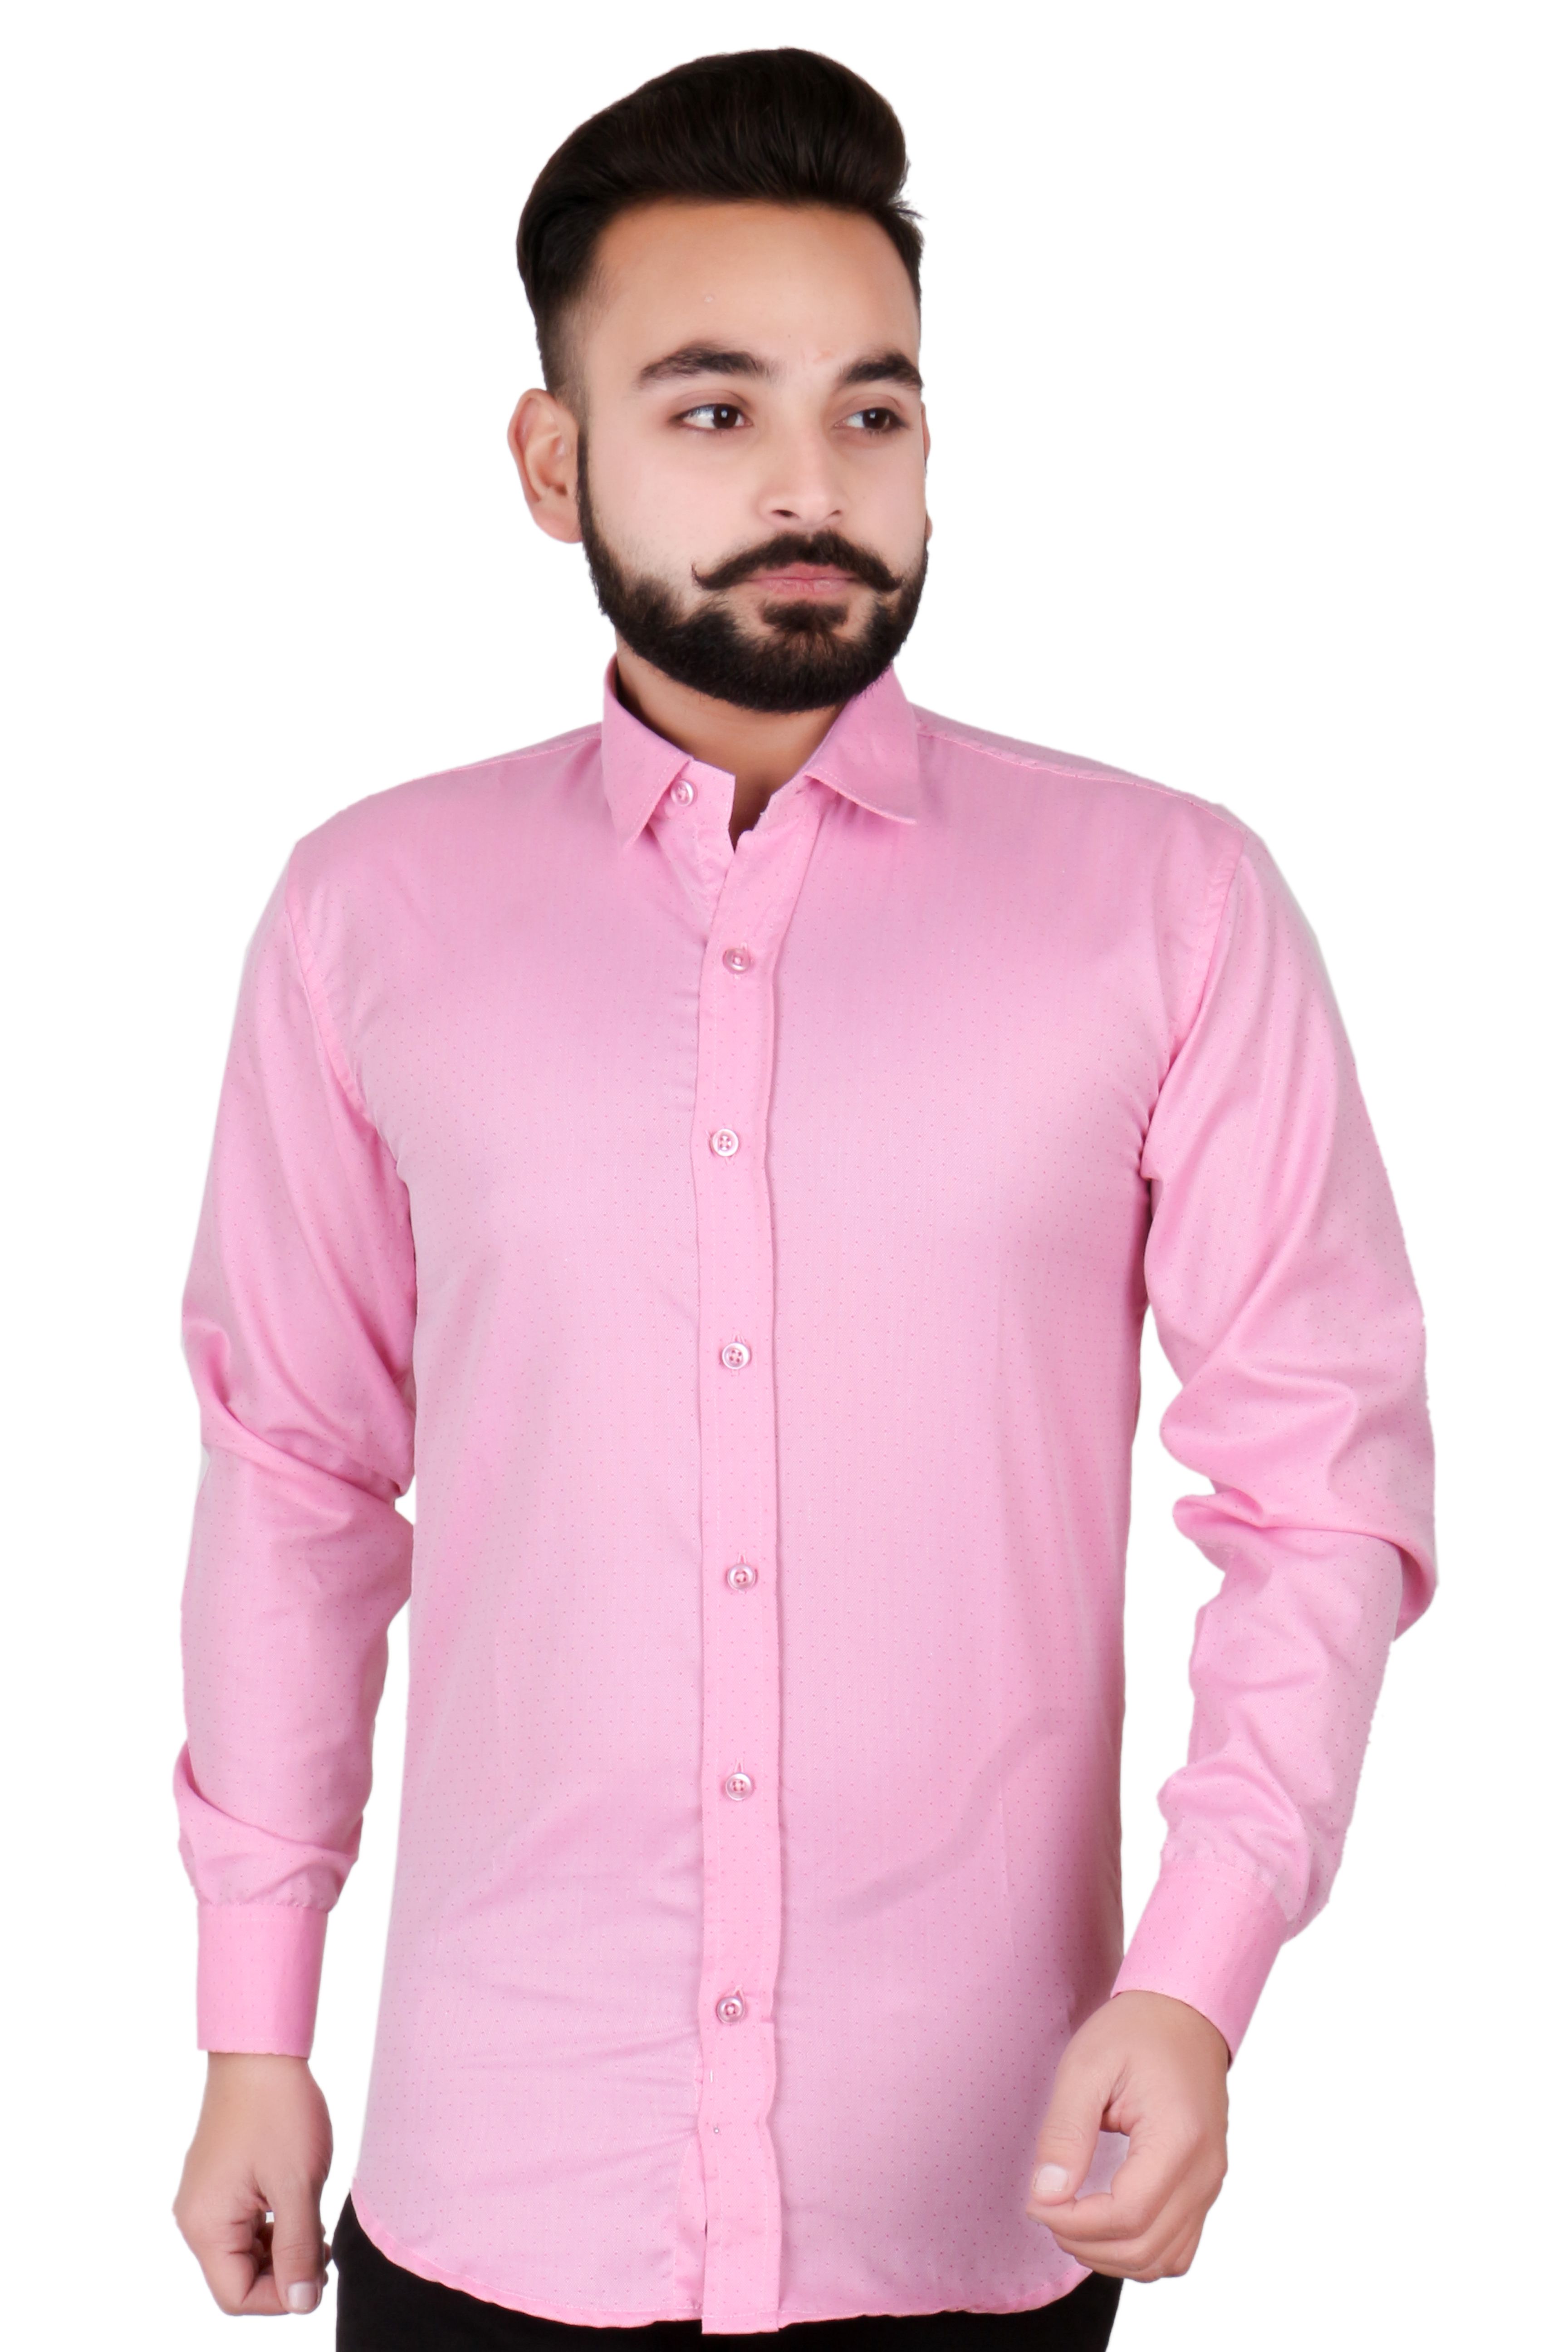 J P N Pink Slim Fit Shirt - Buy J P N Pink Slim Fit Shirt Online at ...